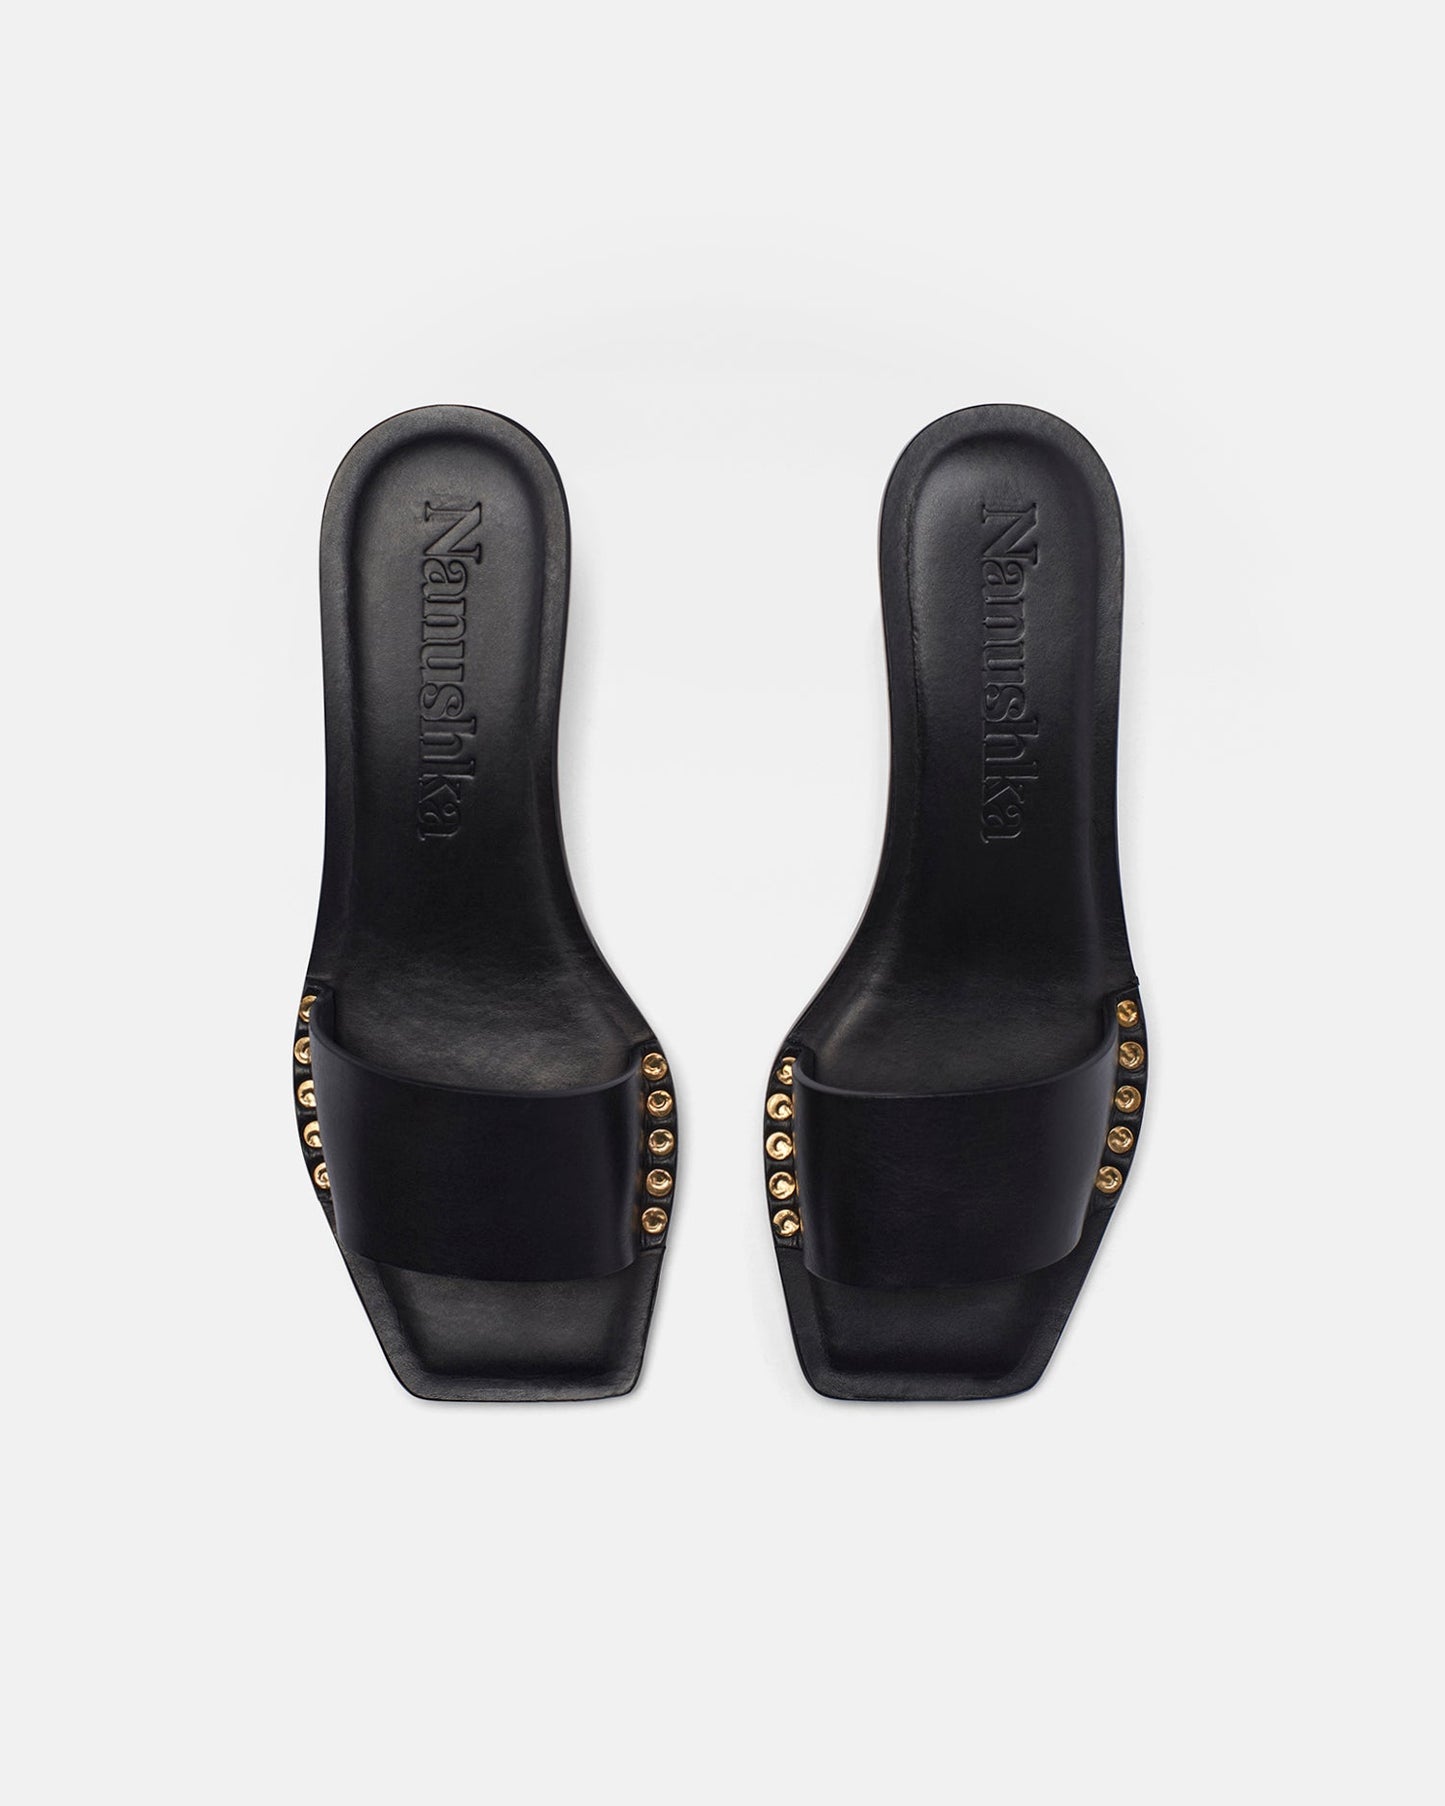 Ibiron - Leather Sandals - Black